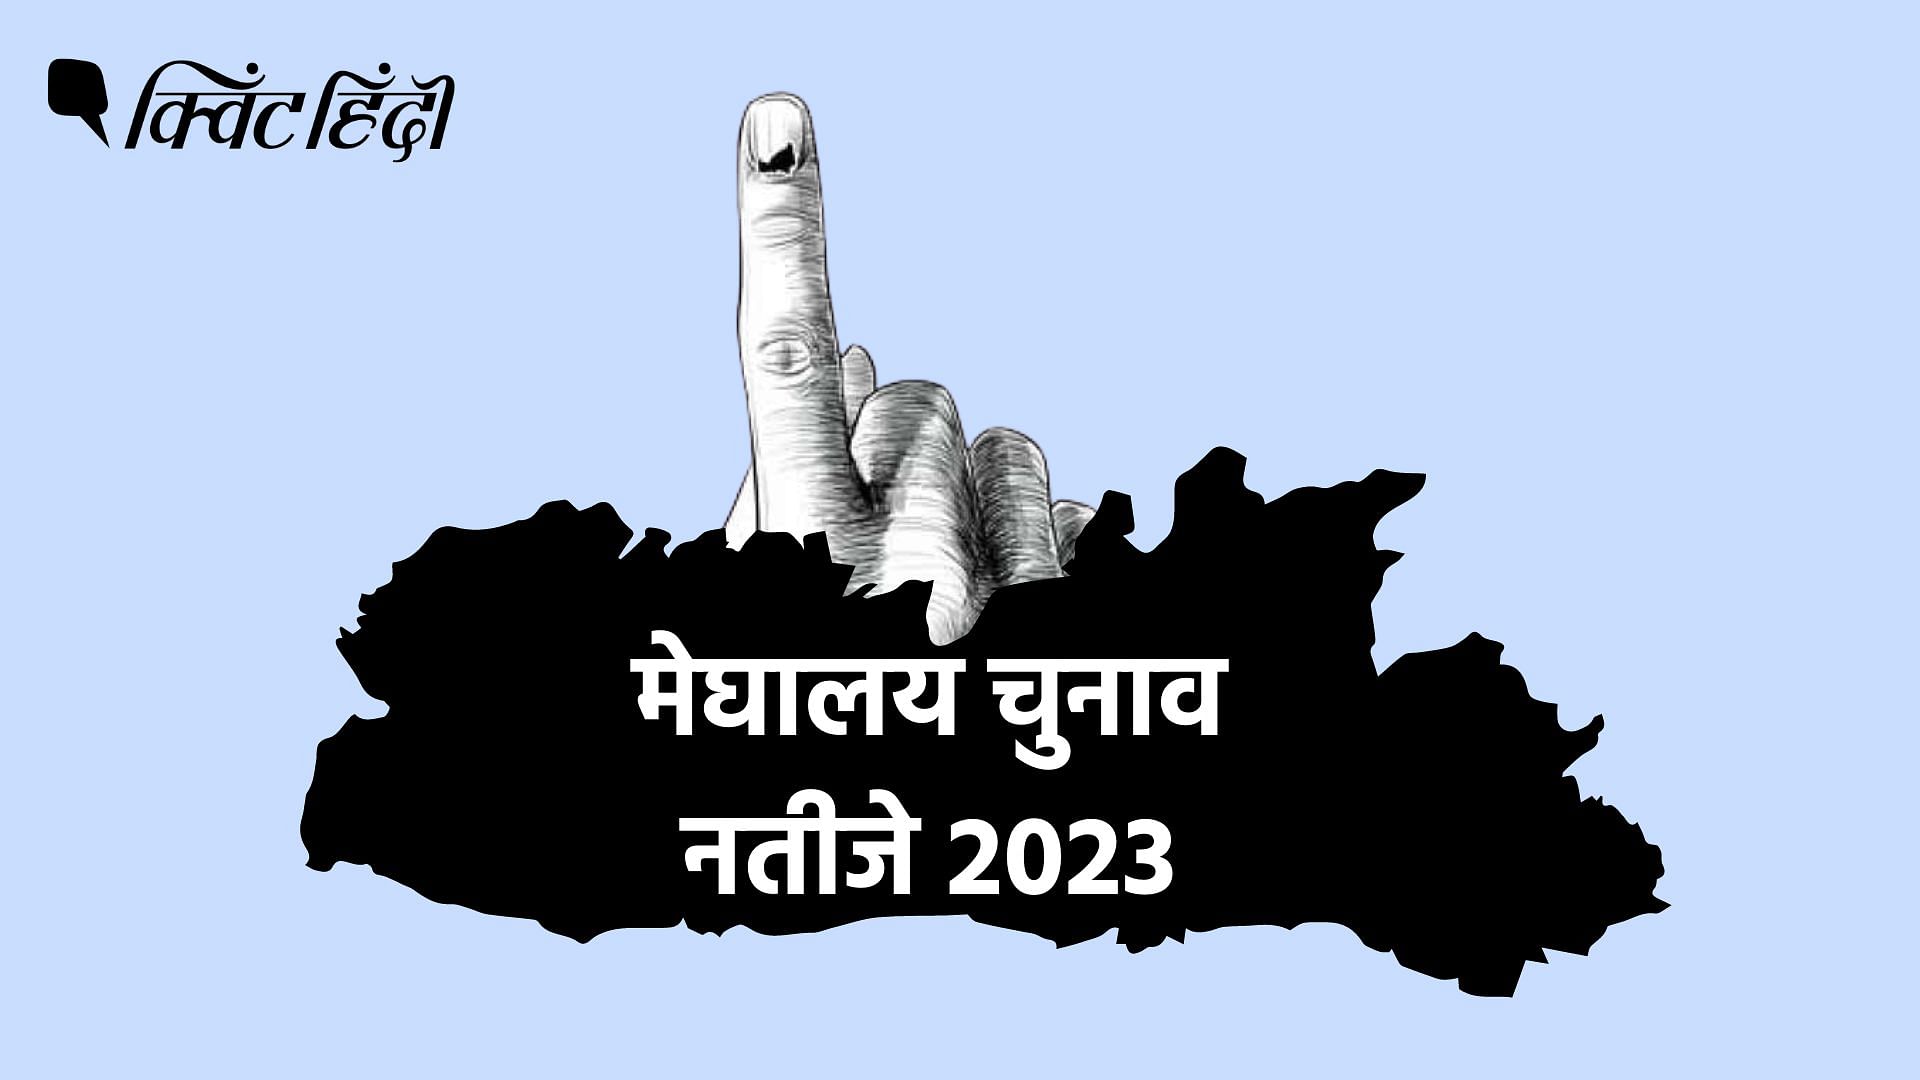 <div class="paragraphs"><p>Meghalaya Election Results 2023 Live: मेघालय विधानसभा चुनाव 2023 के नतीजे आज</p></div>